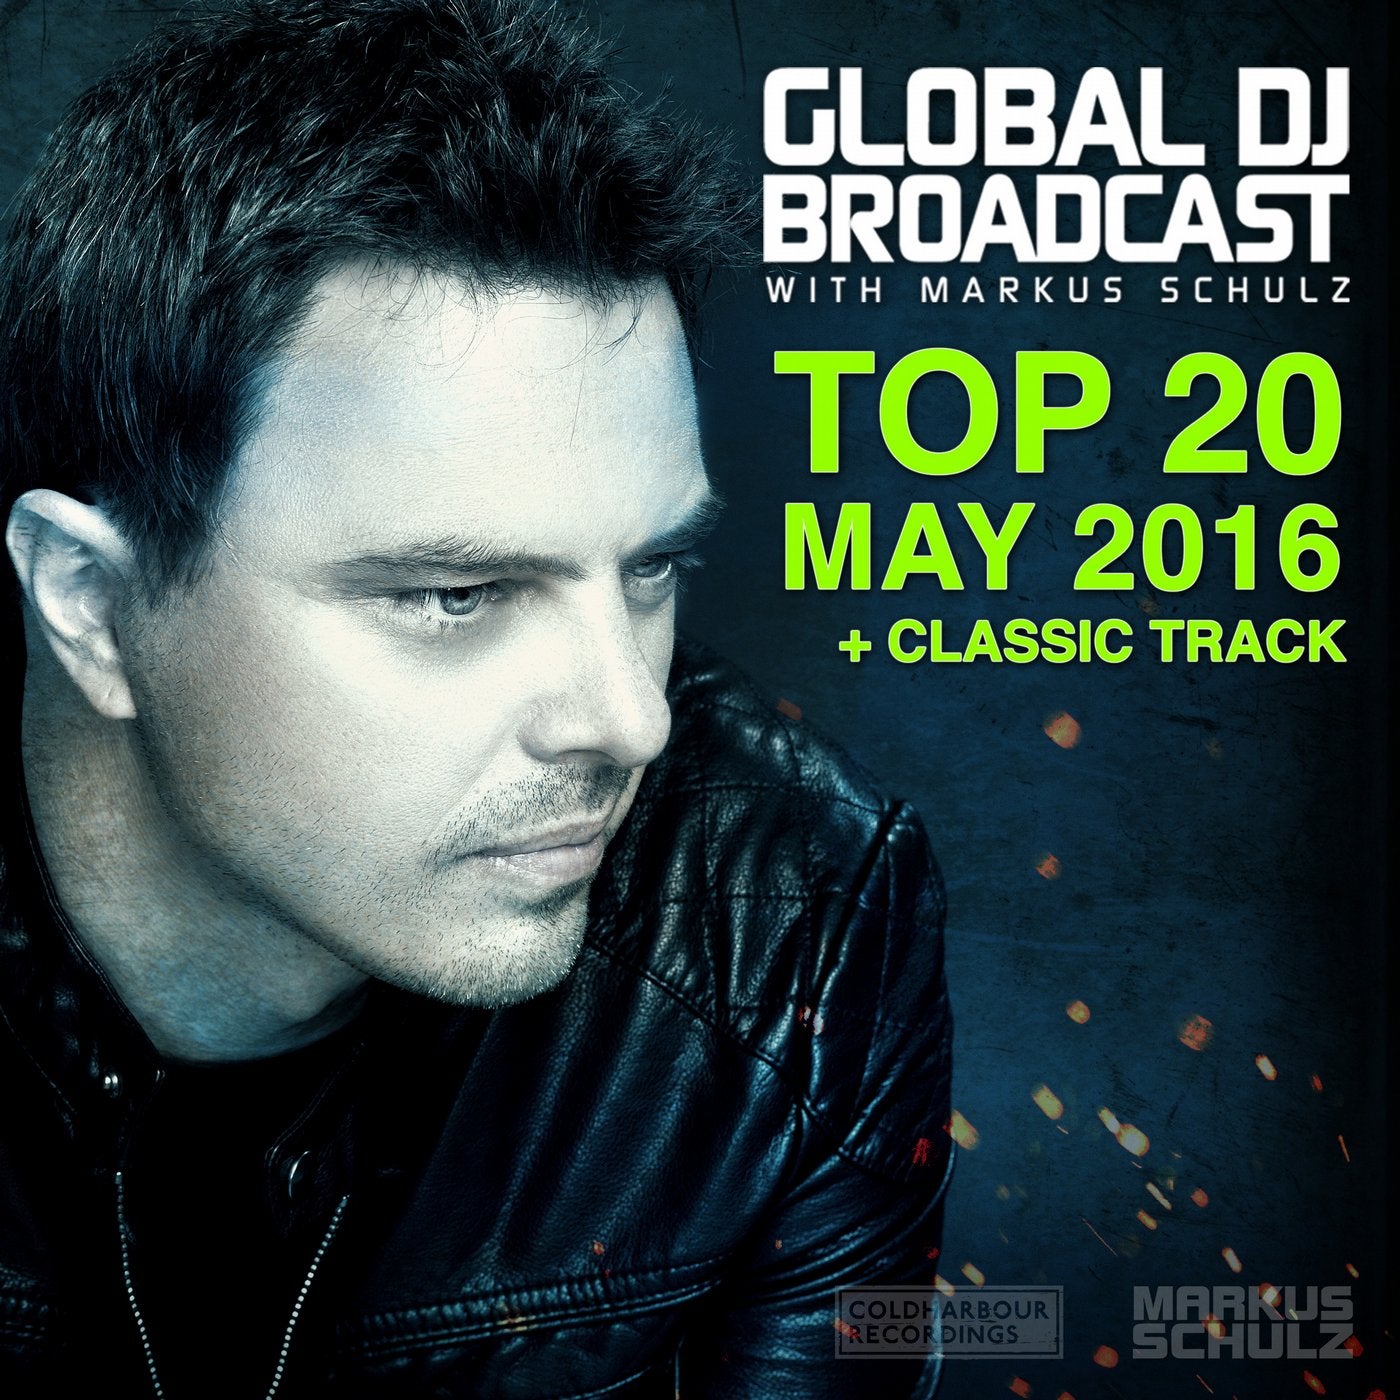 Global DJ Broadcast - Top 20 May 2016